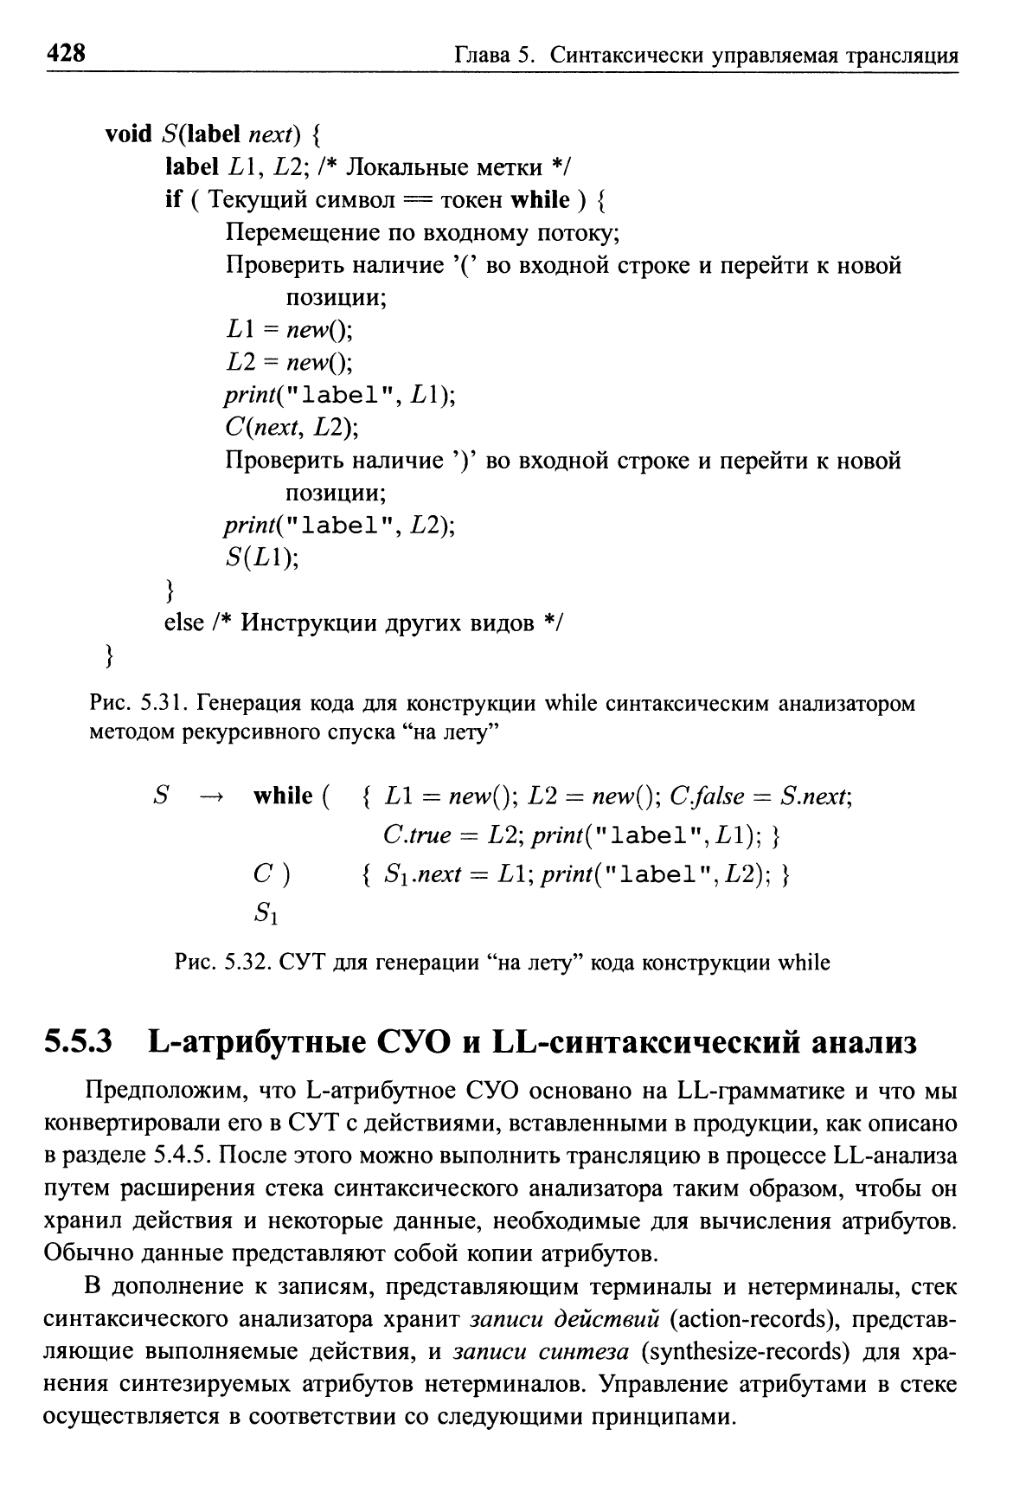 5.5.3 L-атрибутные СУО и LL-синтаксический анализ